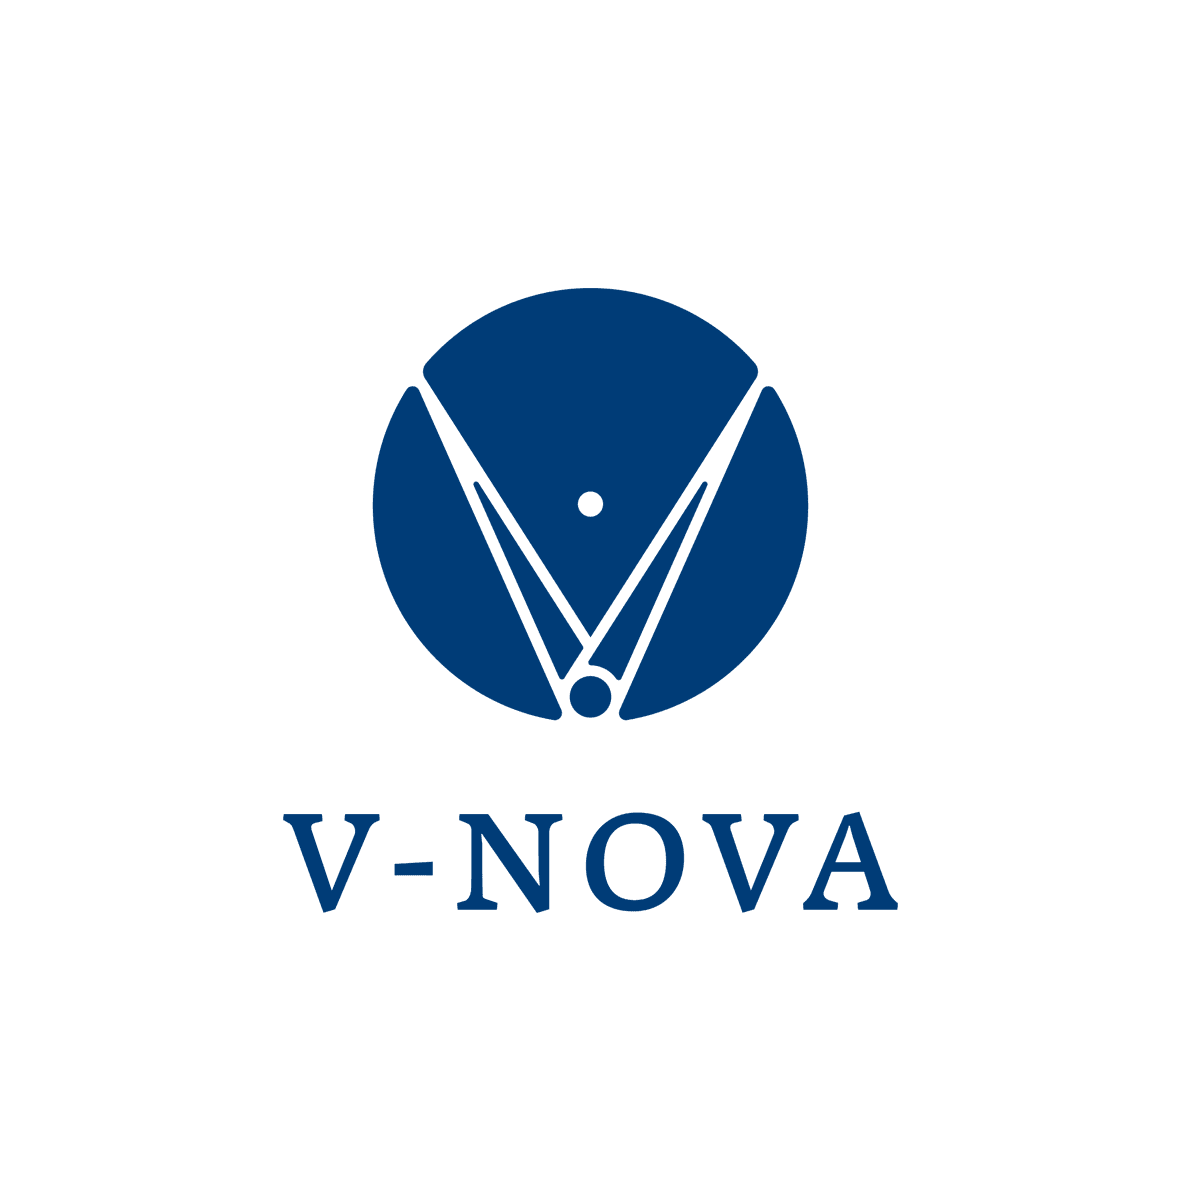 V-Nova small